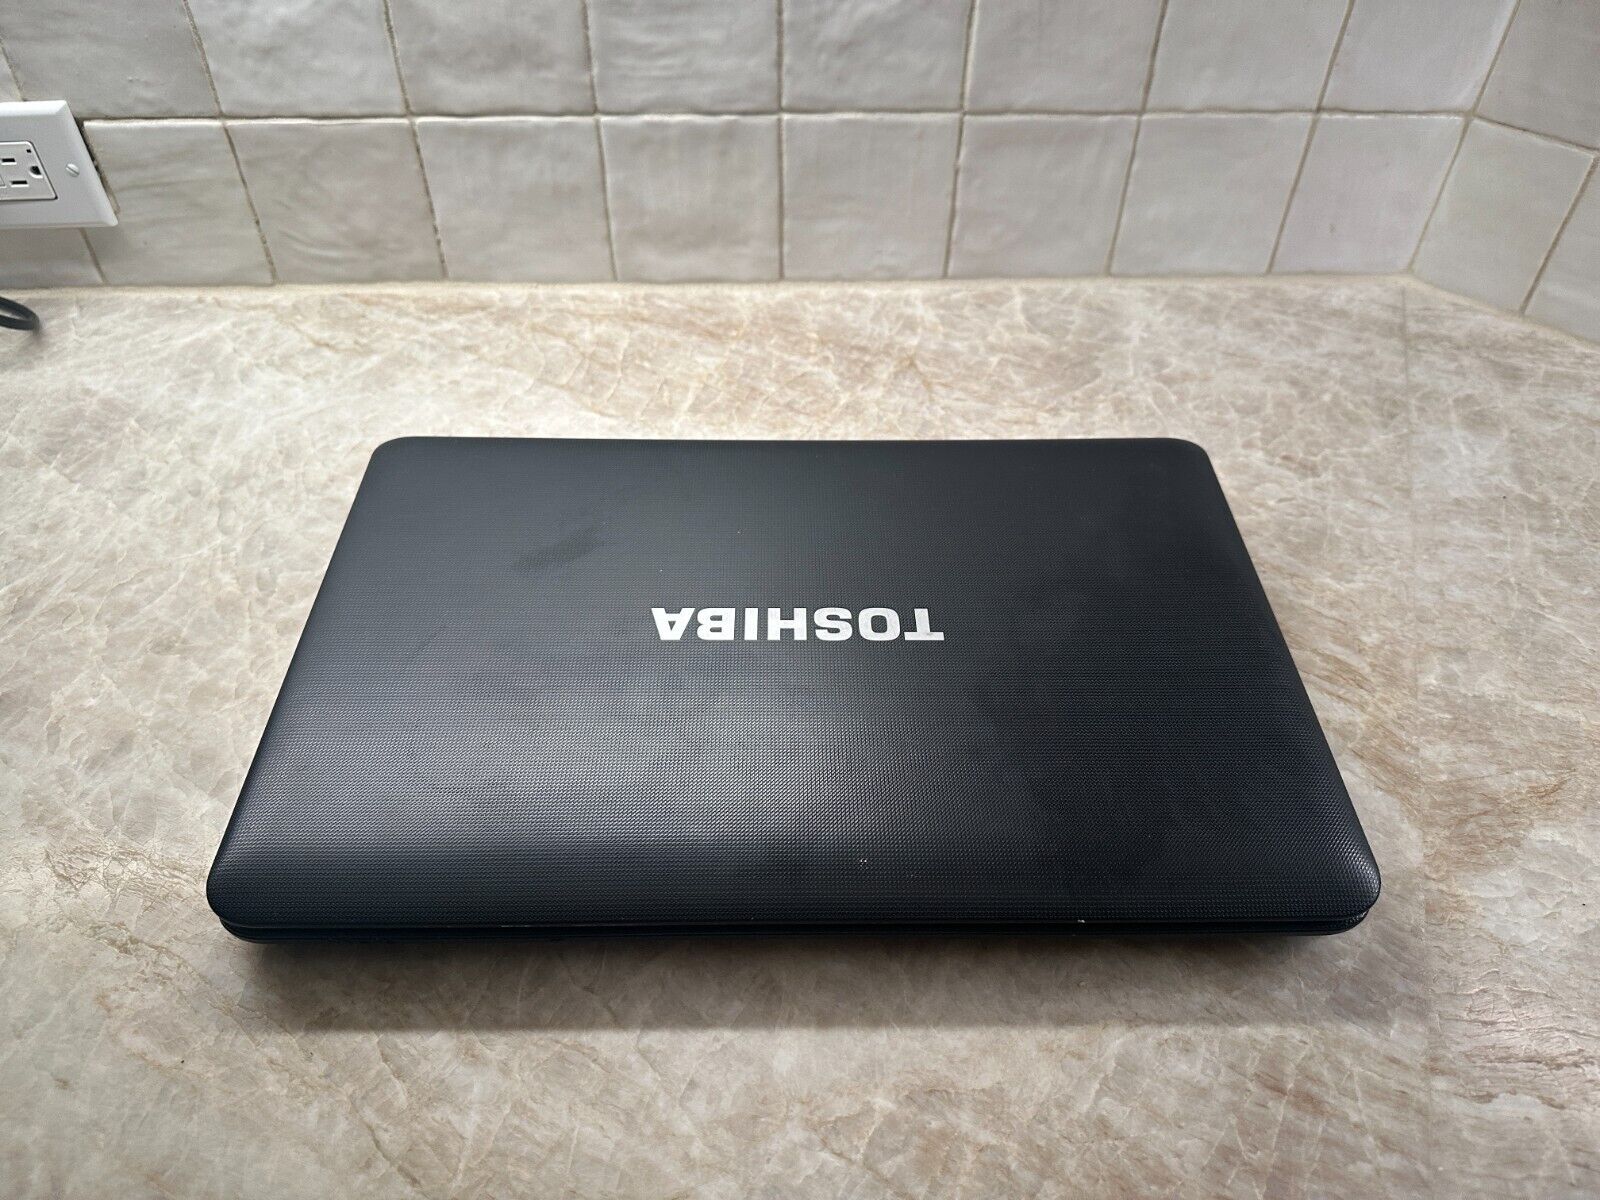 Toshiba Satellite C650D Laptop Windows 7 Home AMD Dual Core 1.3GHz 3GB 320GB DVD